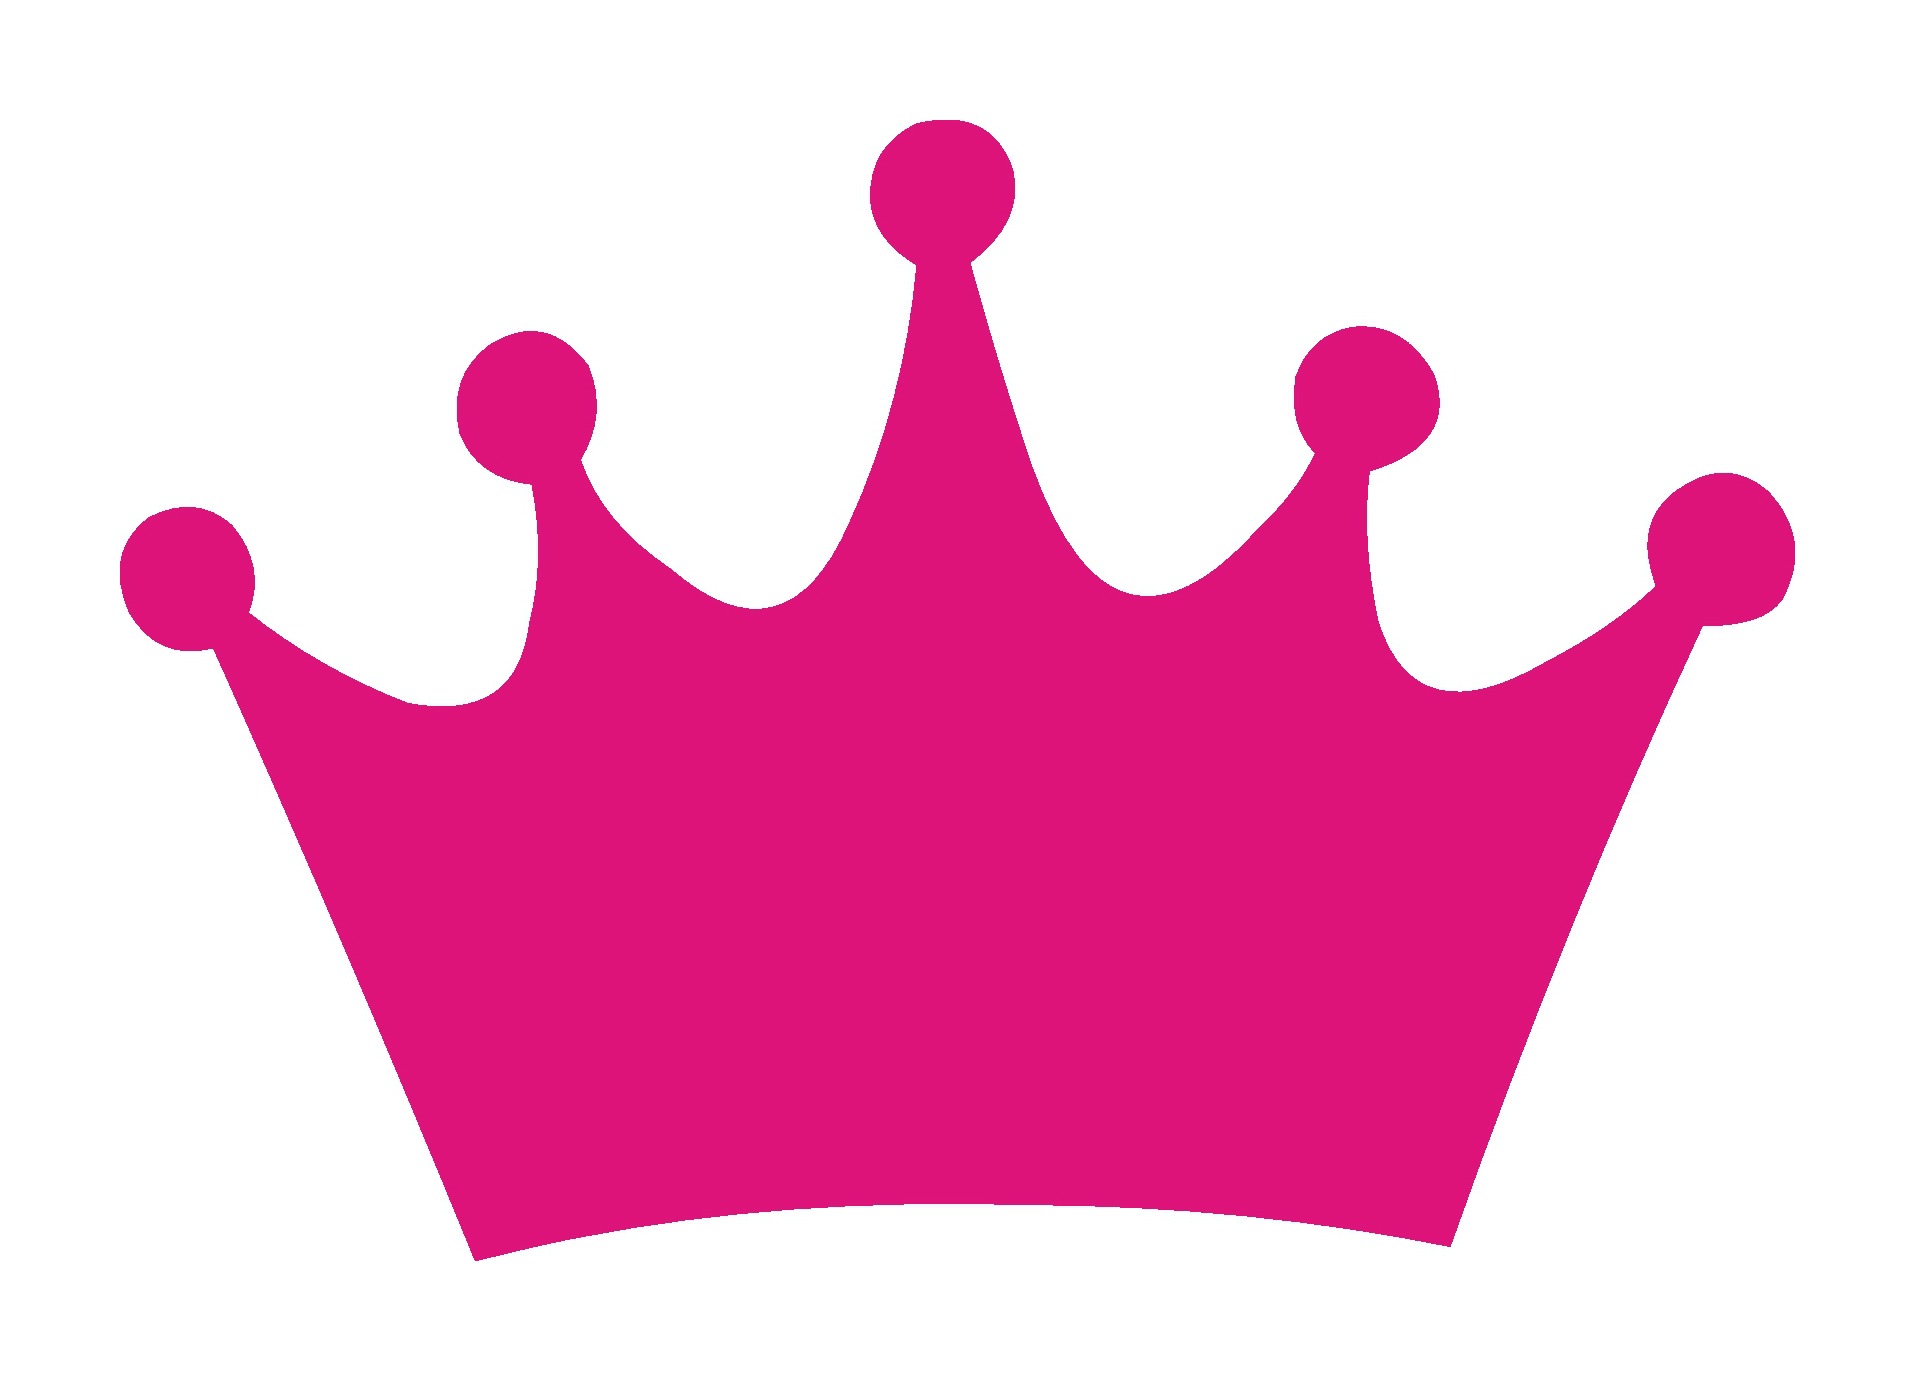 barbie clipart crown